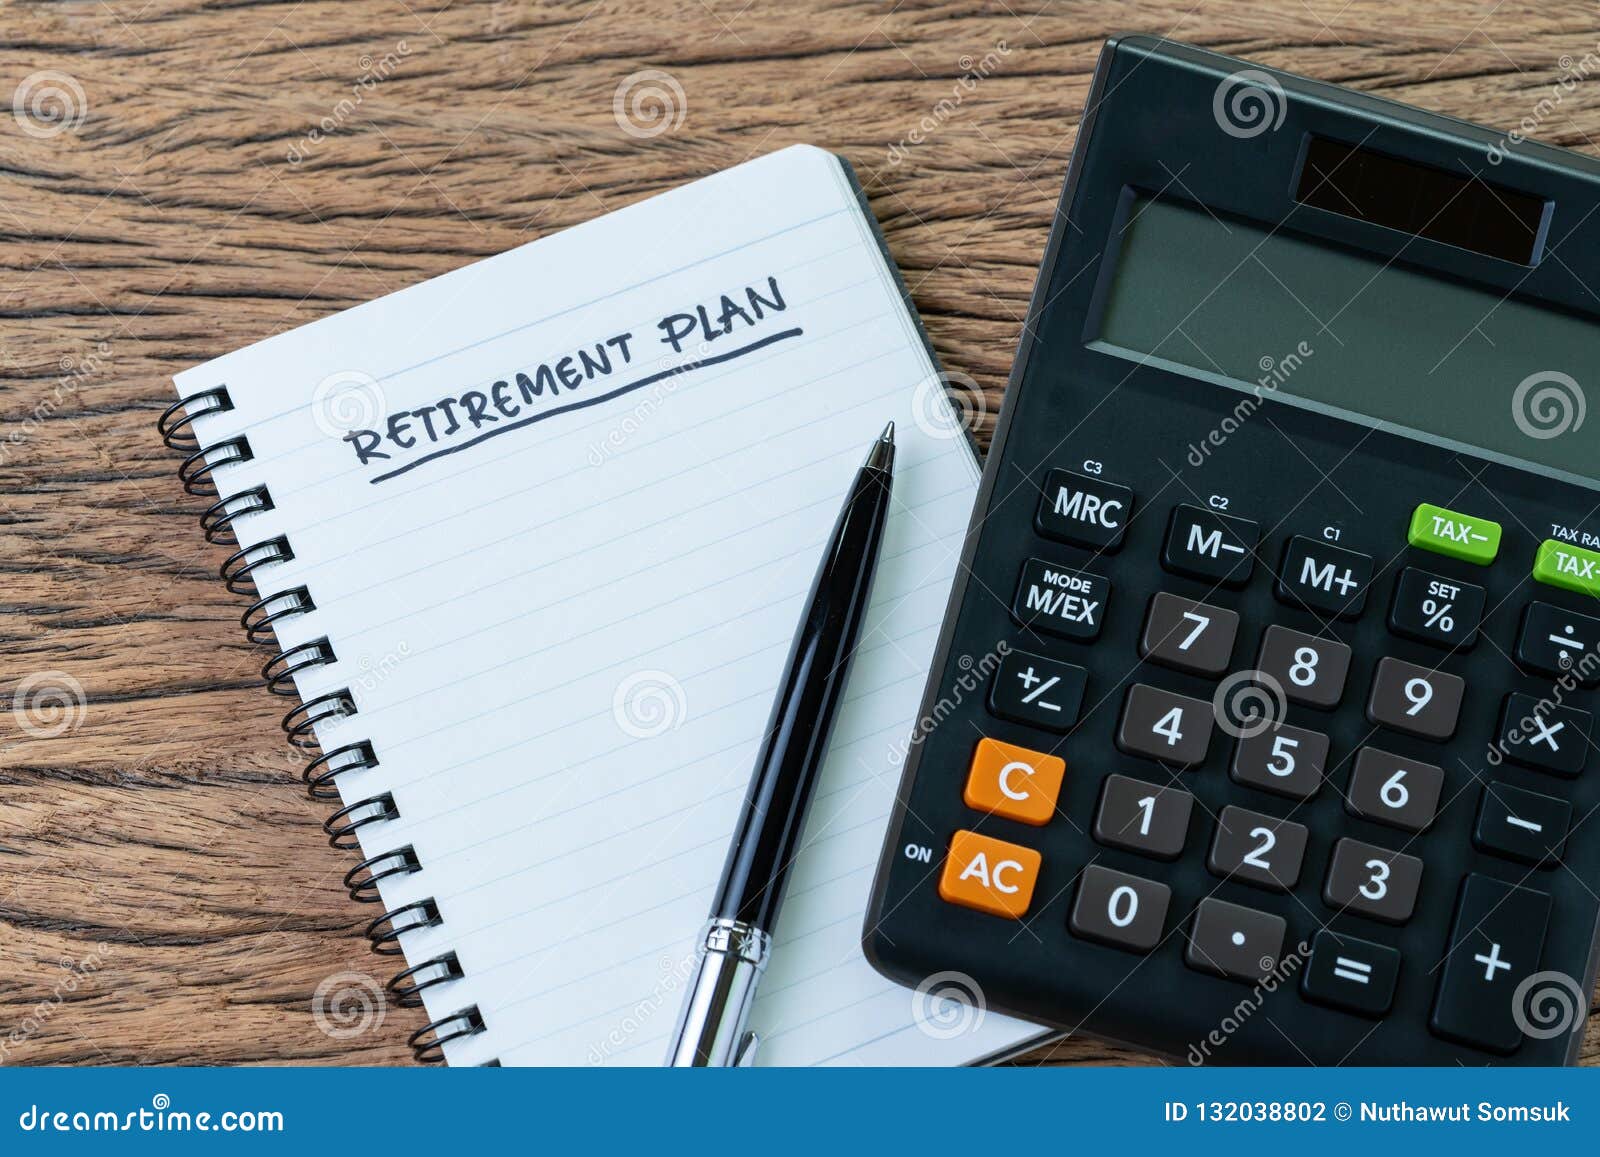 Retirement planning calculator 